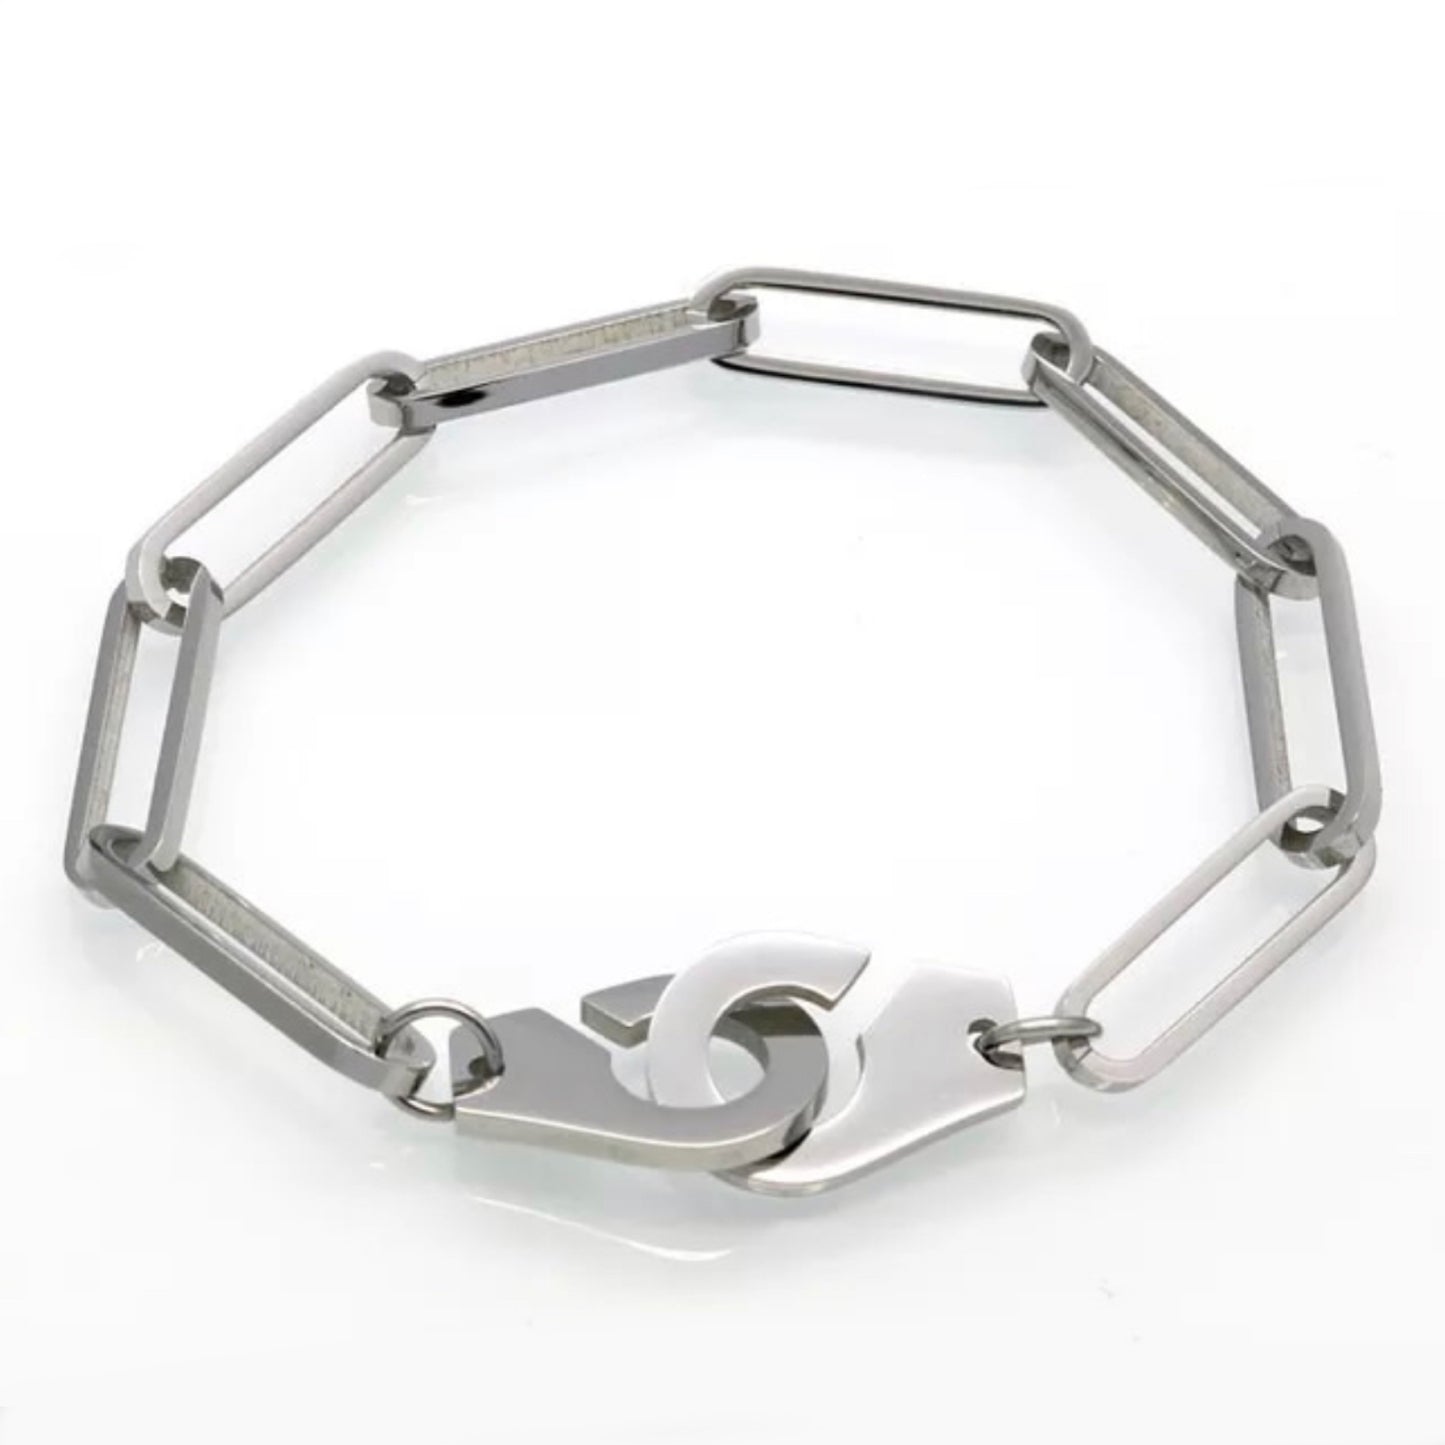 Linked Cuff Bracelet